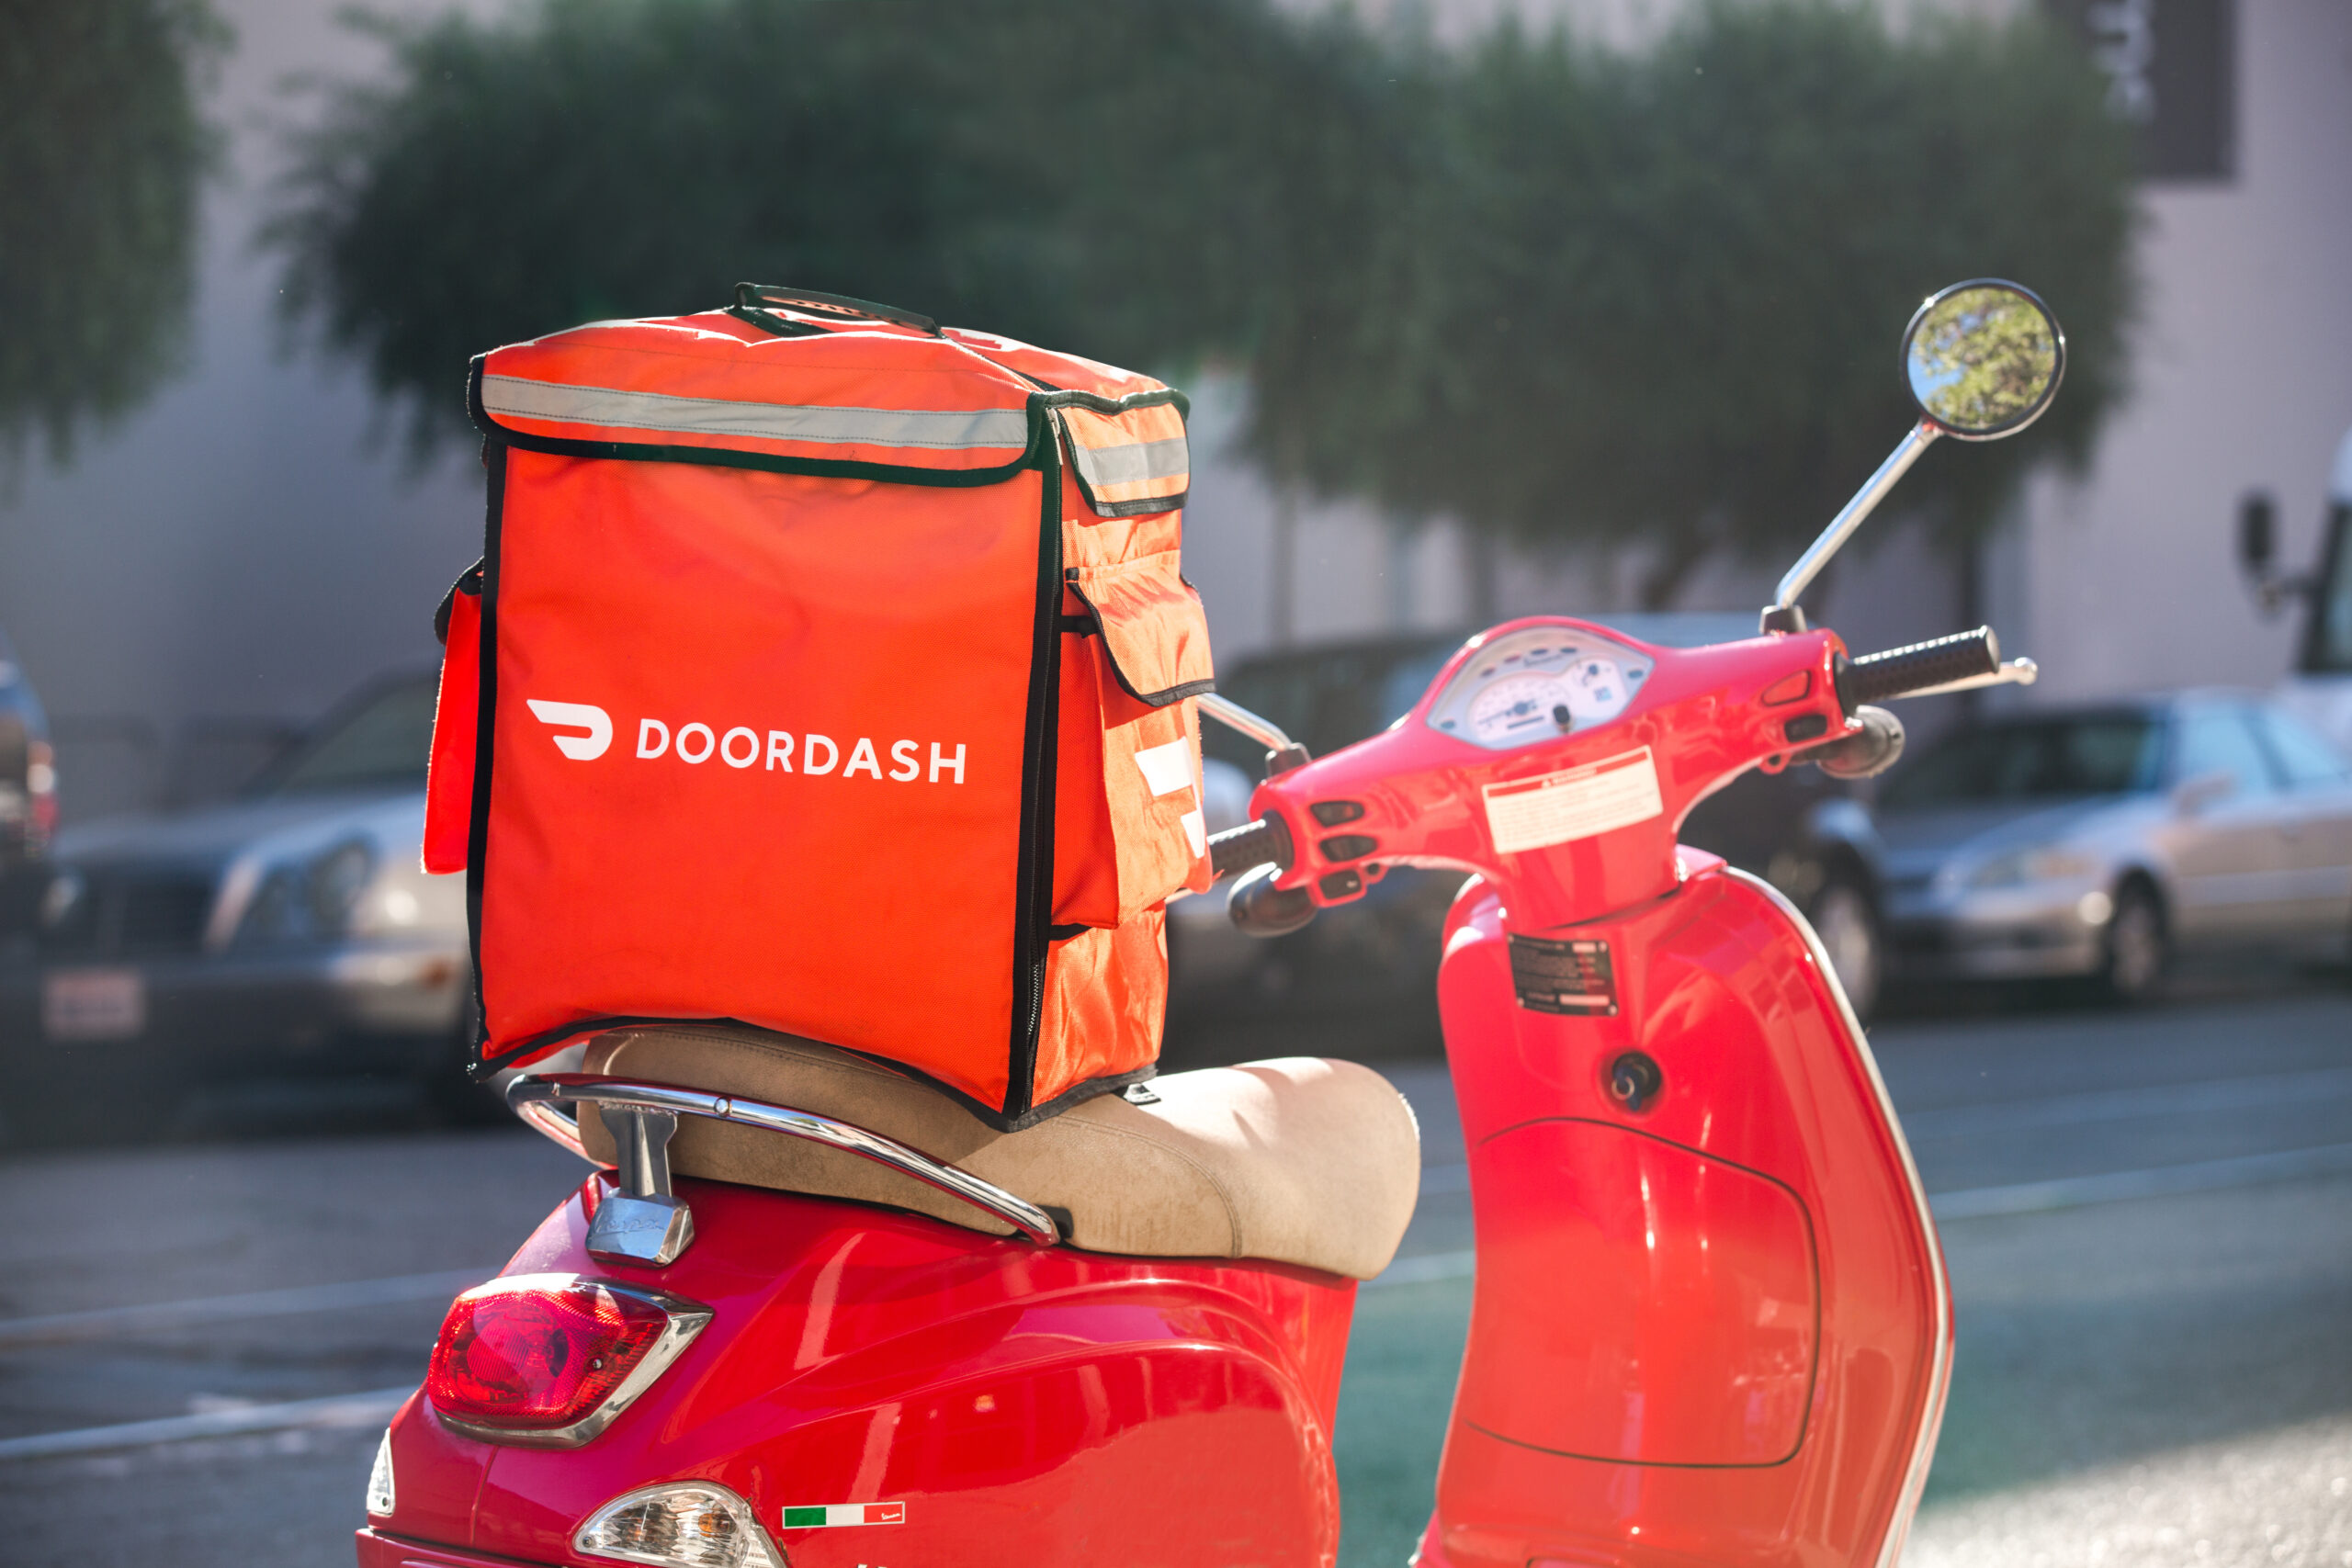 DoorDash red motorcycle